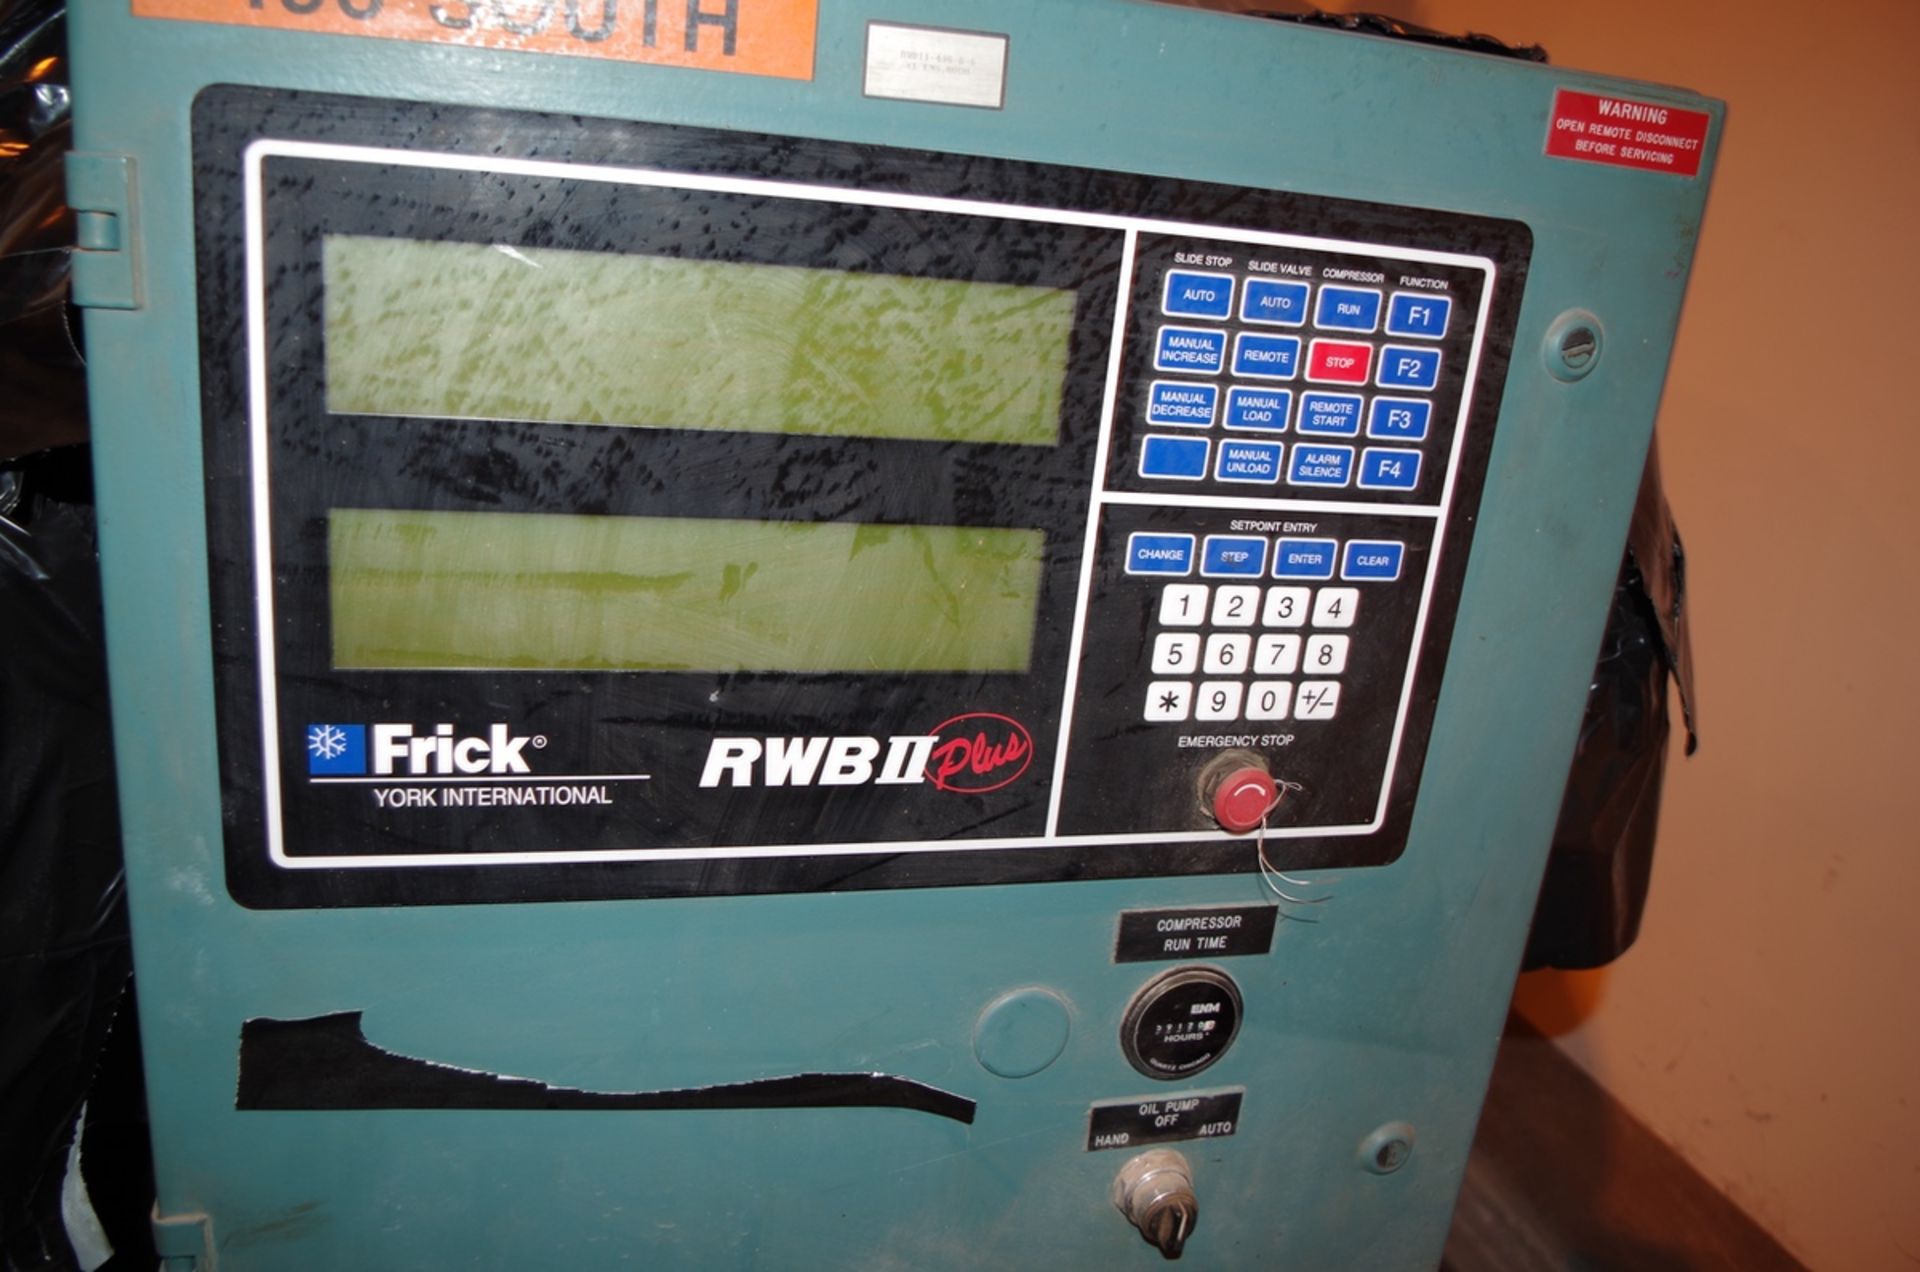 Frick 300HP Rotary Screw Ammonia Compressor, Model RWB II 496B, S/N S0066RFMFTHA003 | Rig Fee: $1000 - Image 3 of 4